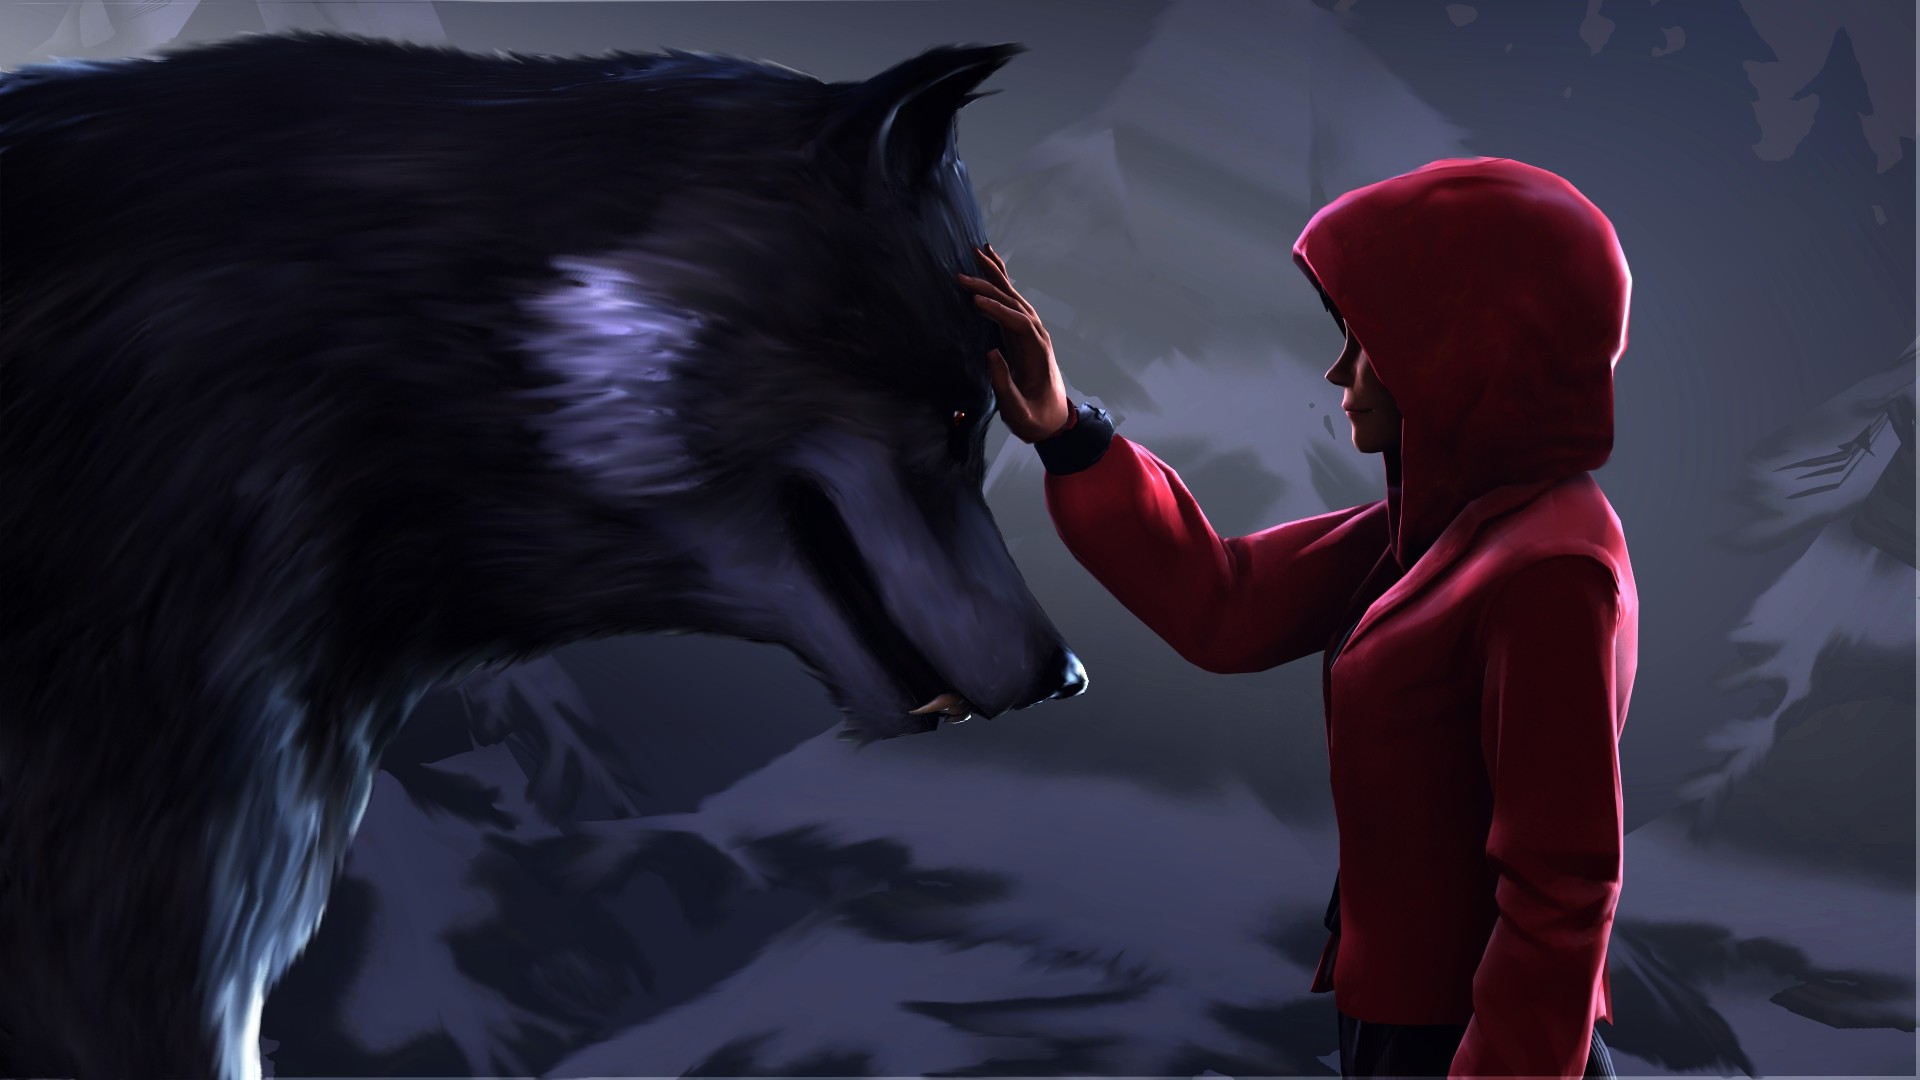 Werewolf red riding hood